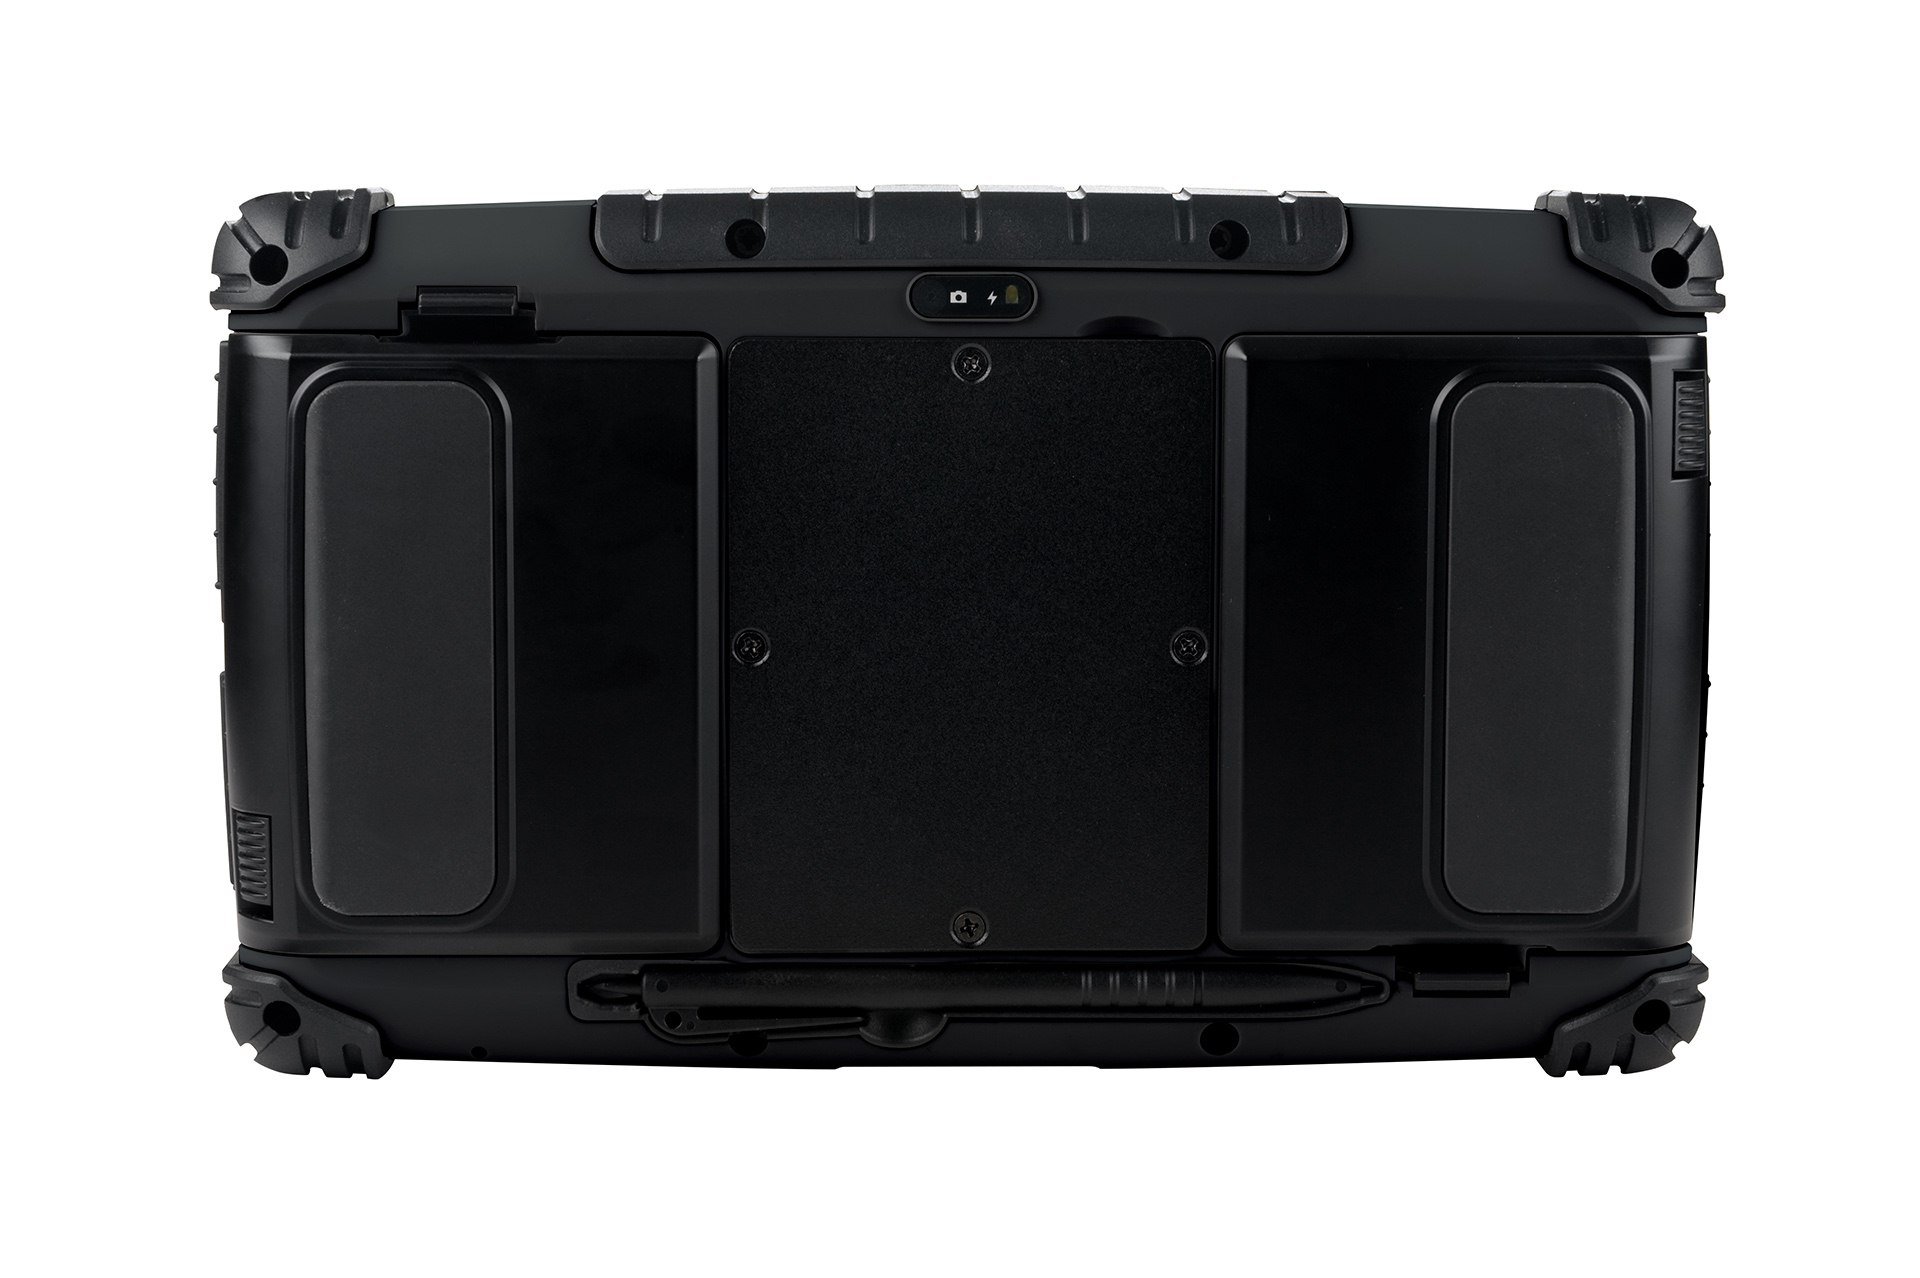 Algiz-7-handheld-rugged-tablet-backside-new.jpg